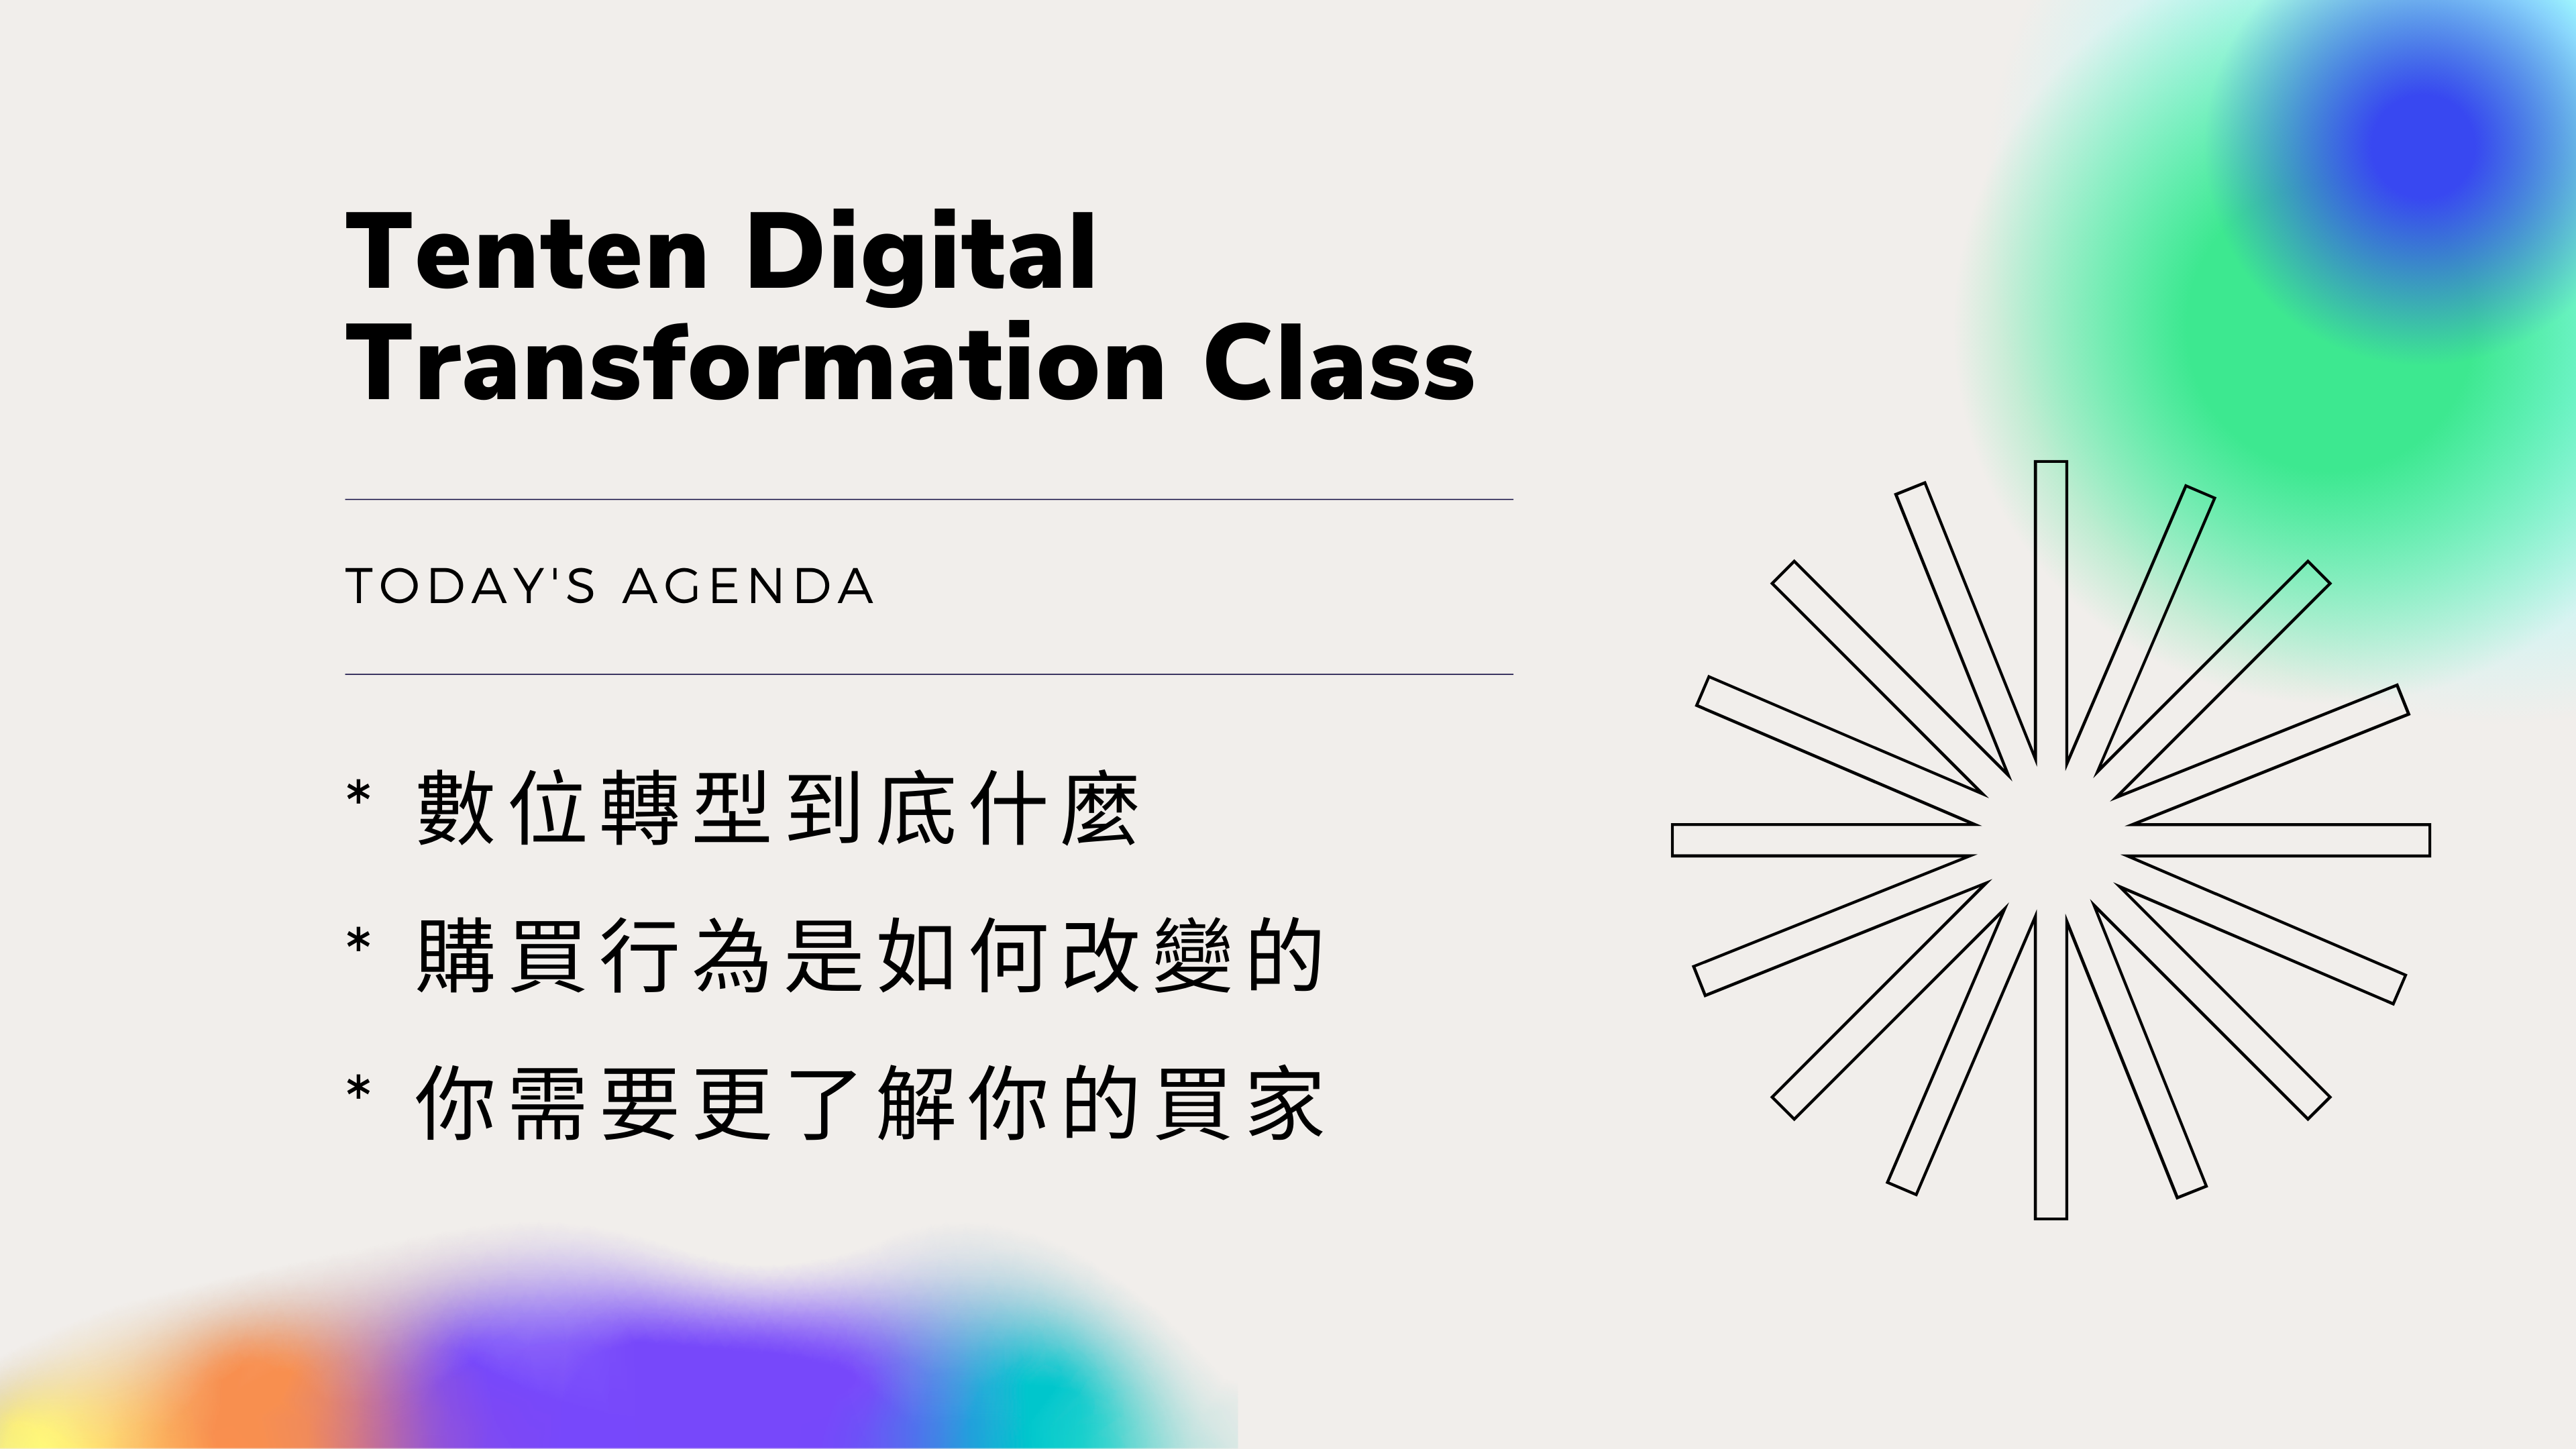 Digital Transformation Class by tenten.co